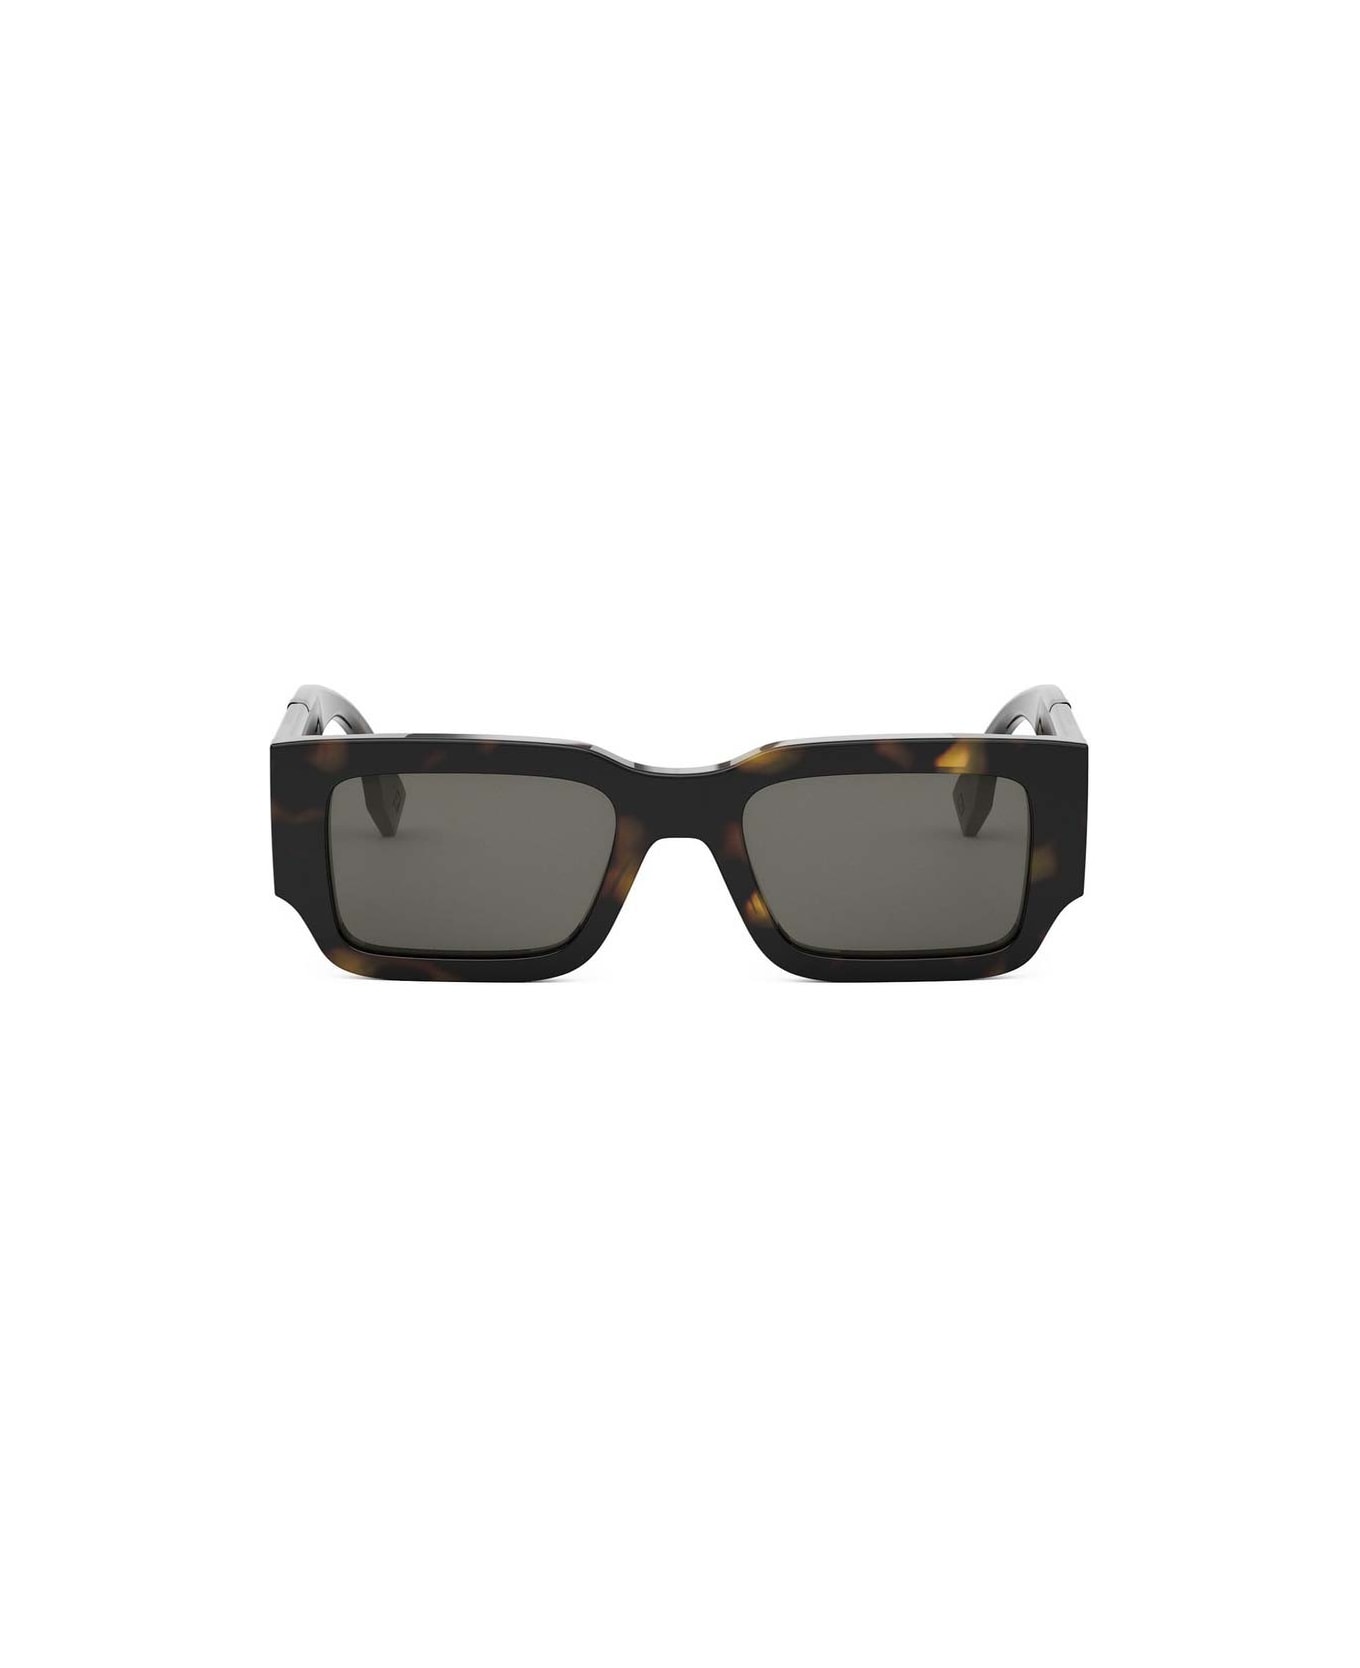 Fendi Eyewear Sunglasses - Havana/Grigio サングラス